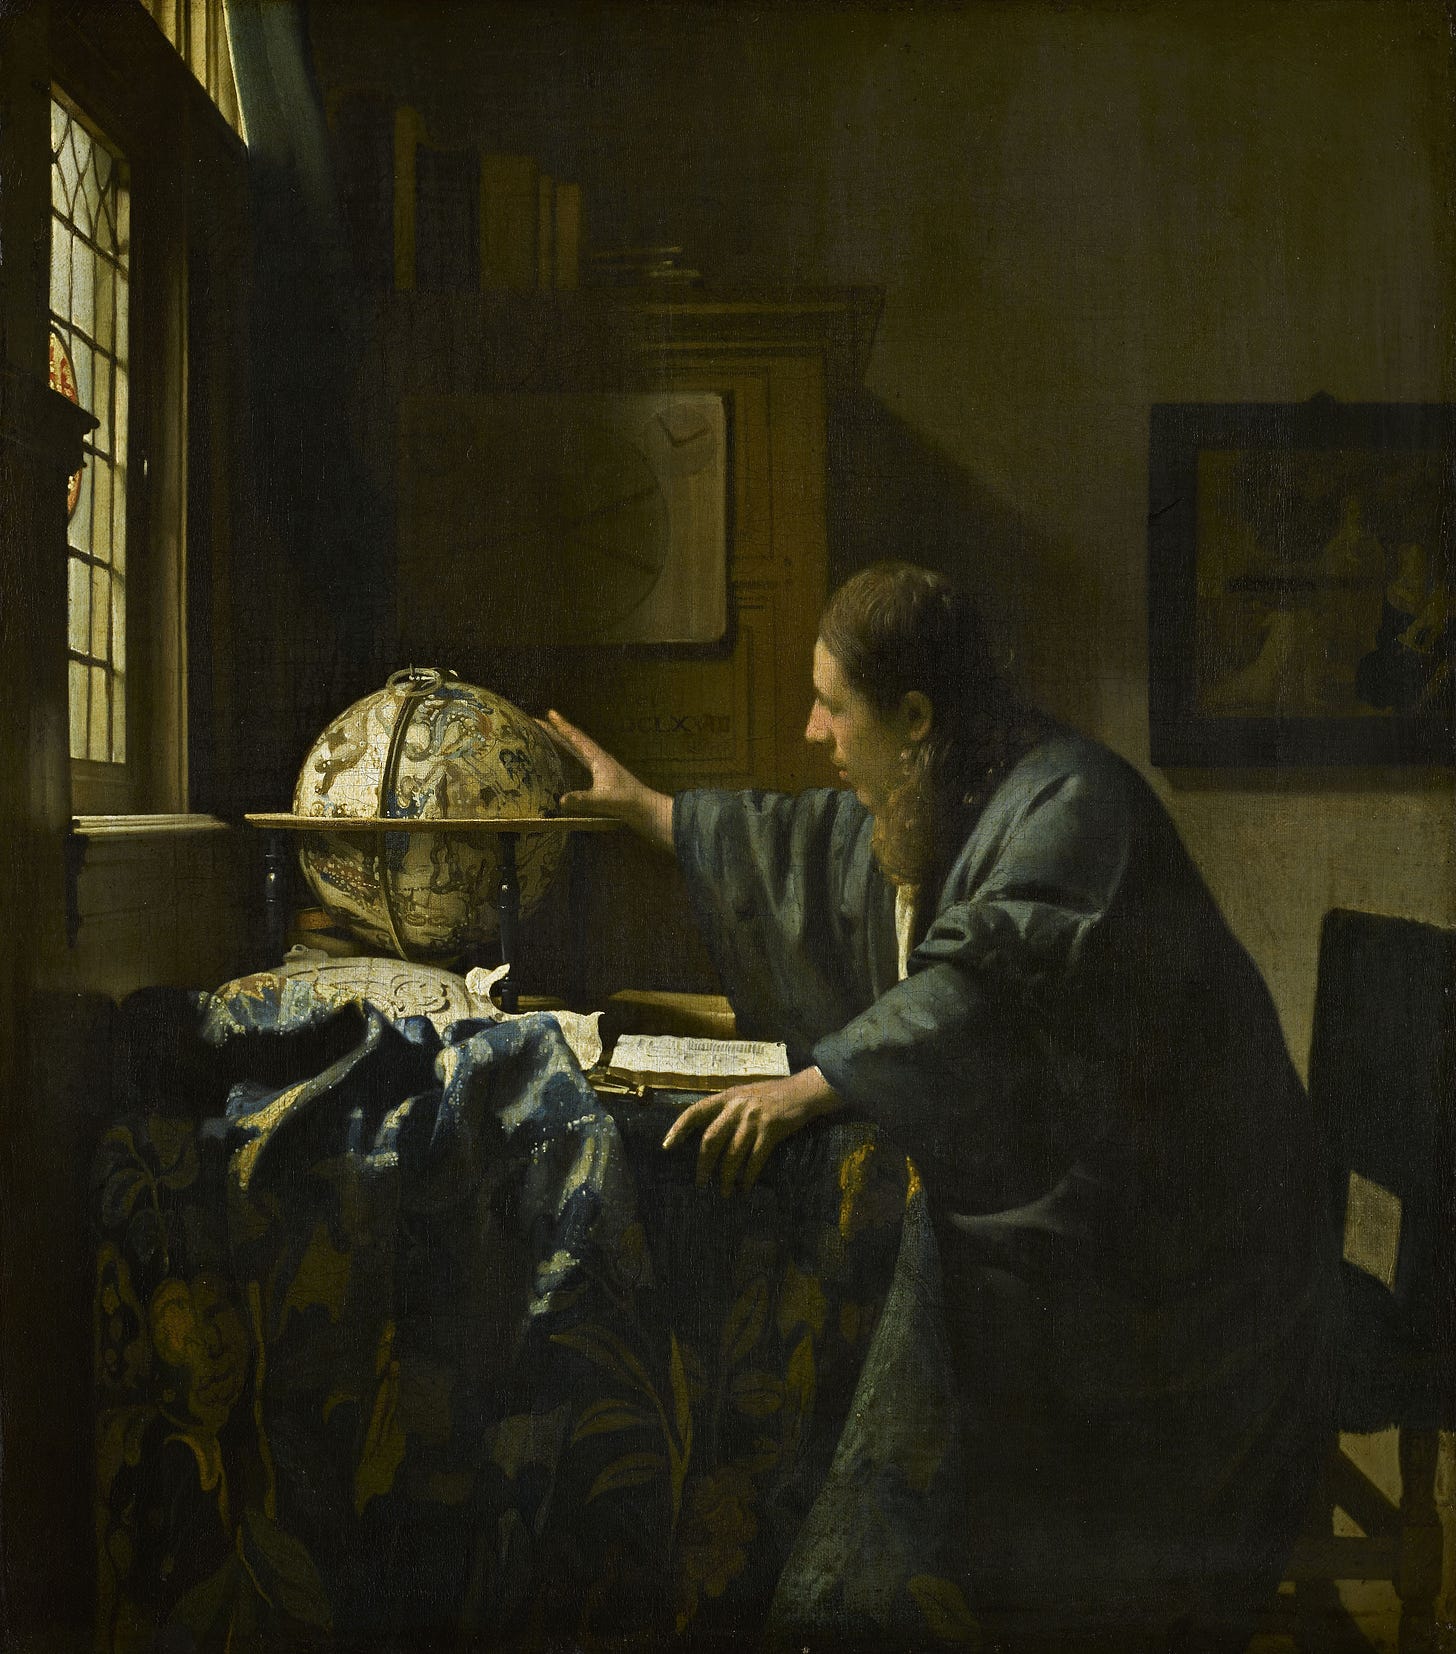 The Astronomer (Vermeer) - Wikipedia